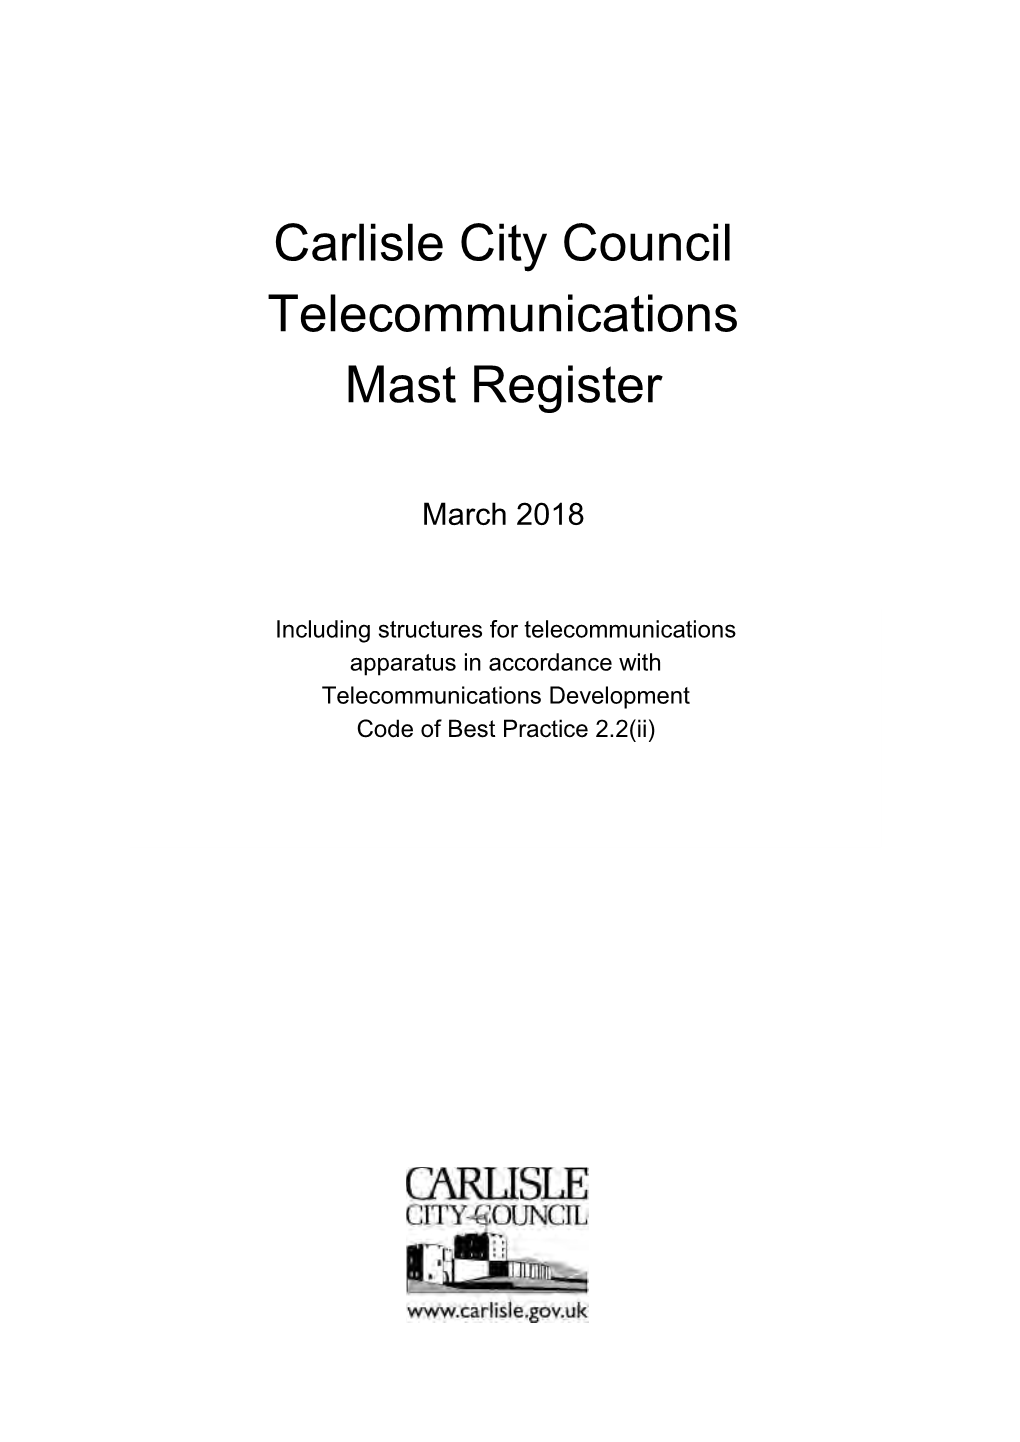 Carlisle City Council Telecommunications Mast Register